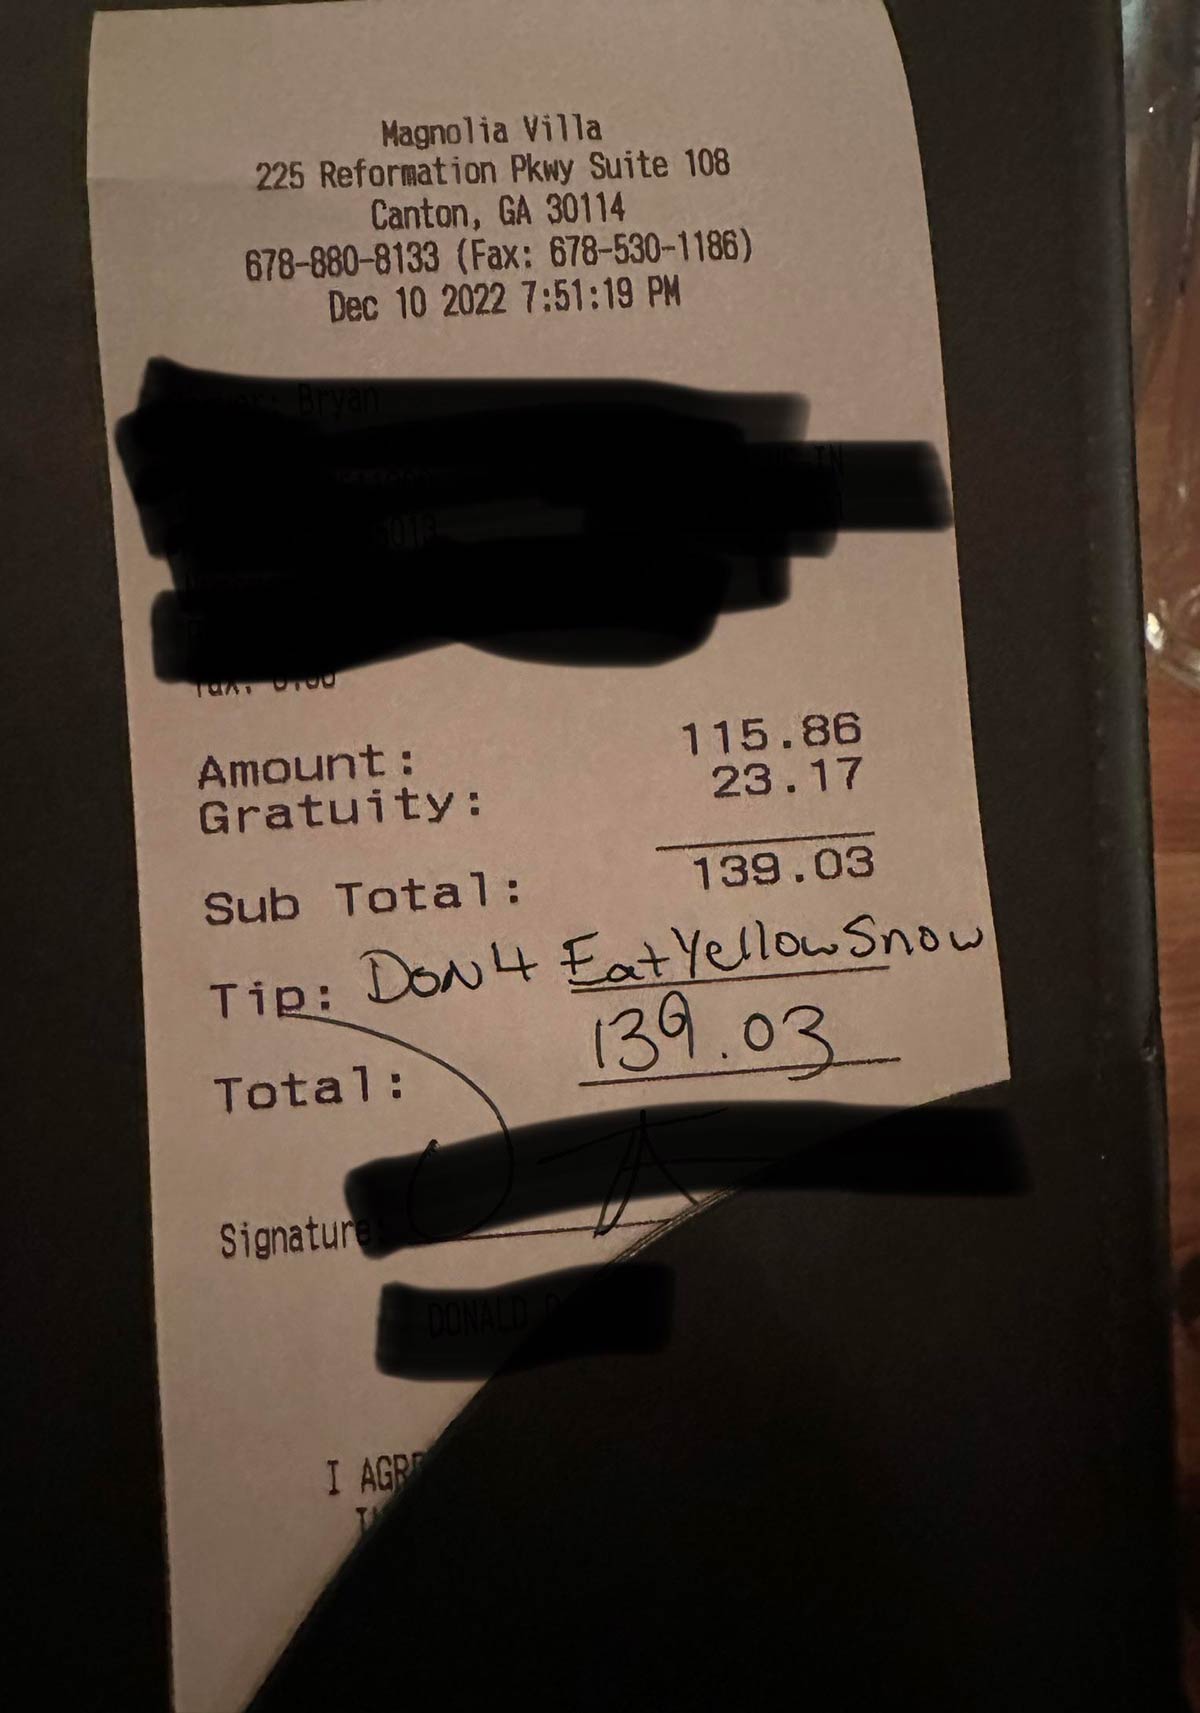 I appreciate the extra tip